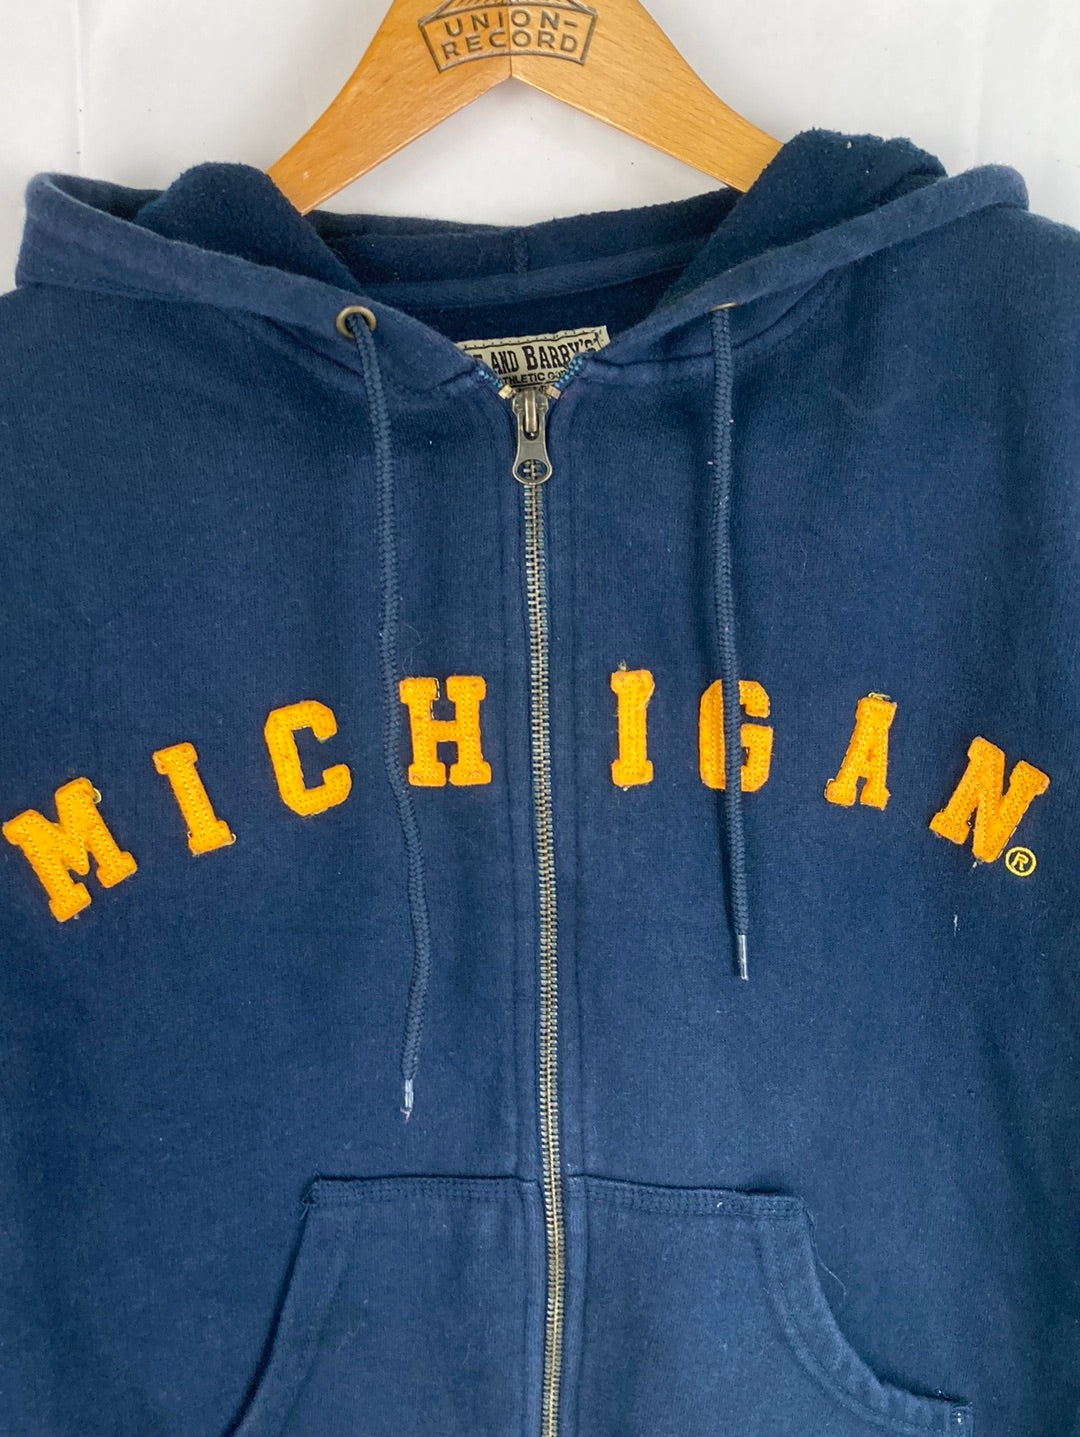 Michigan Sweater (XS)